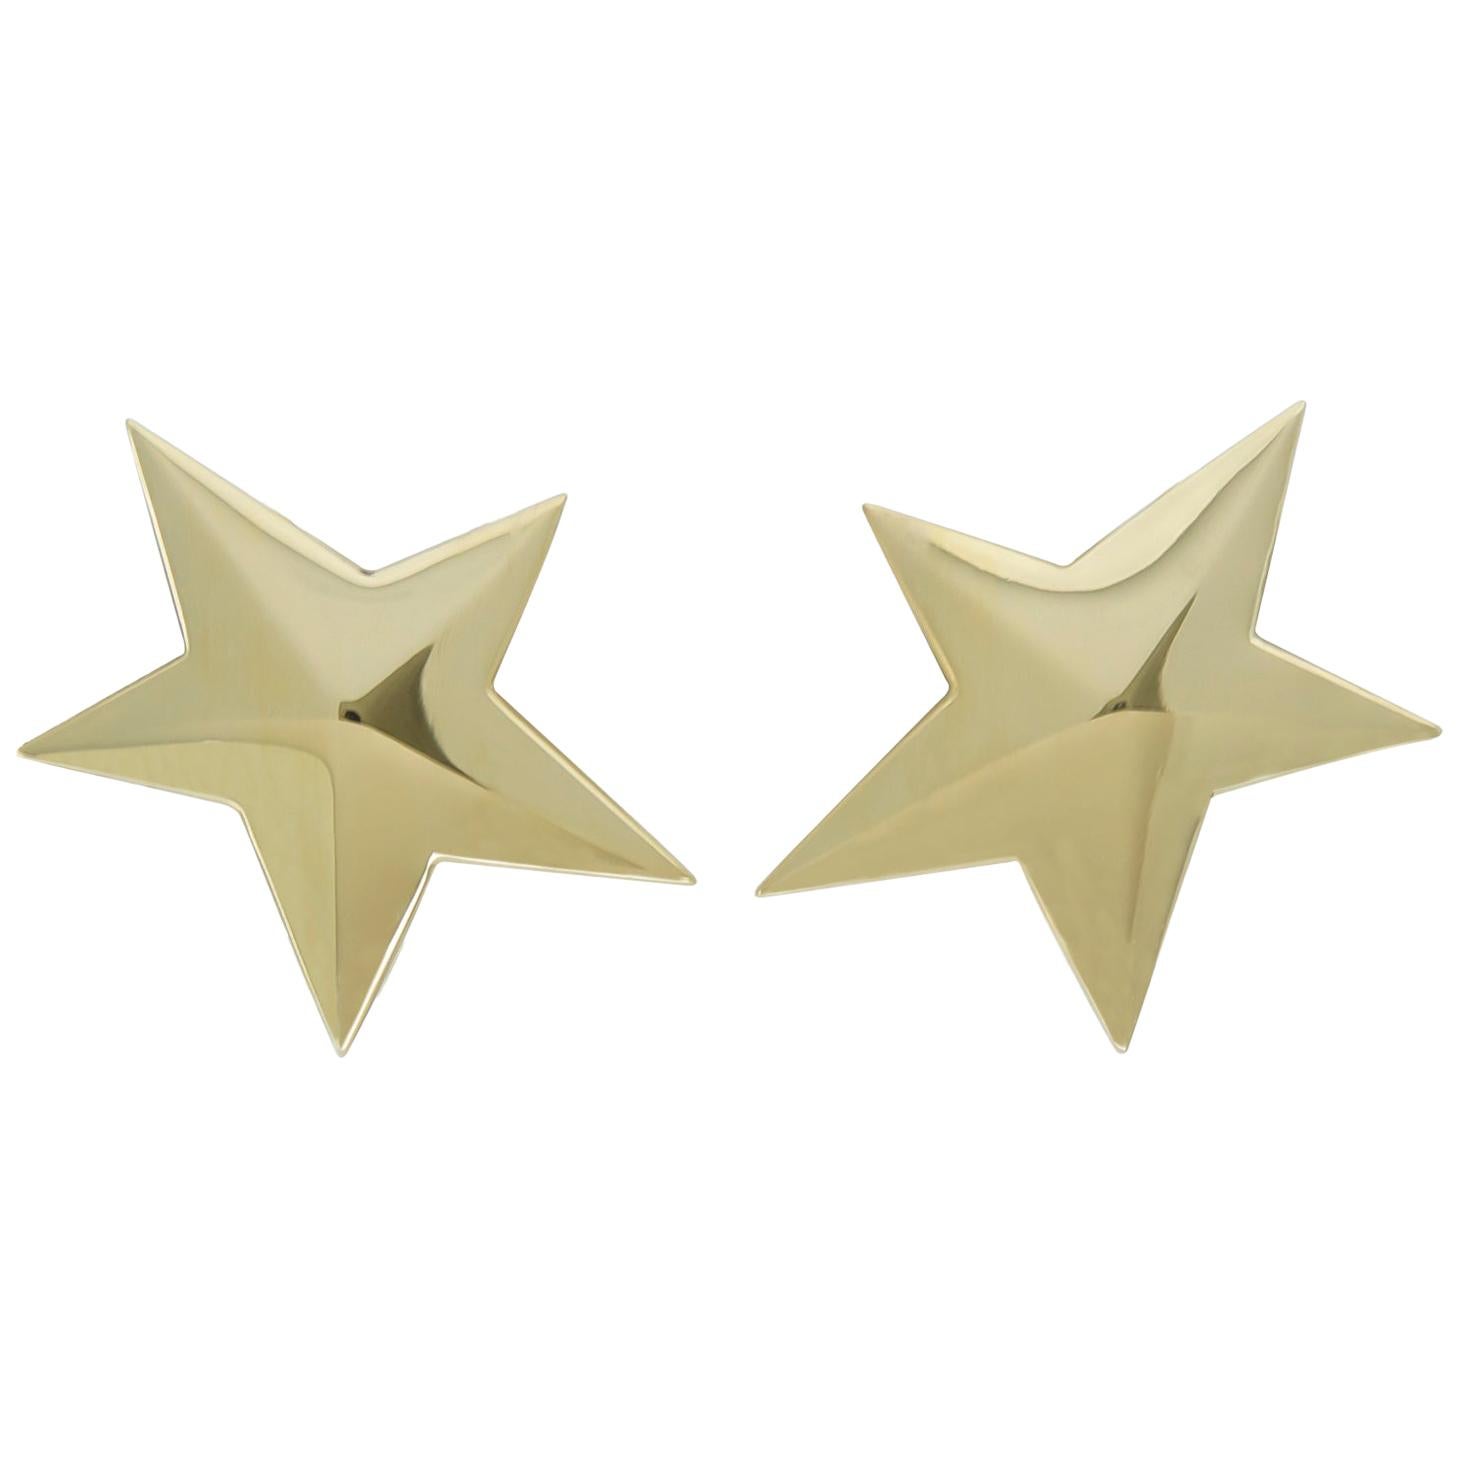 Gold Tiffany & Co. Star Ear Clips